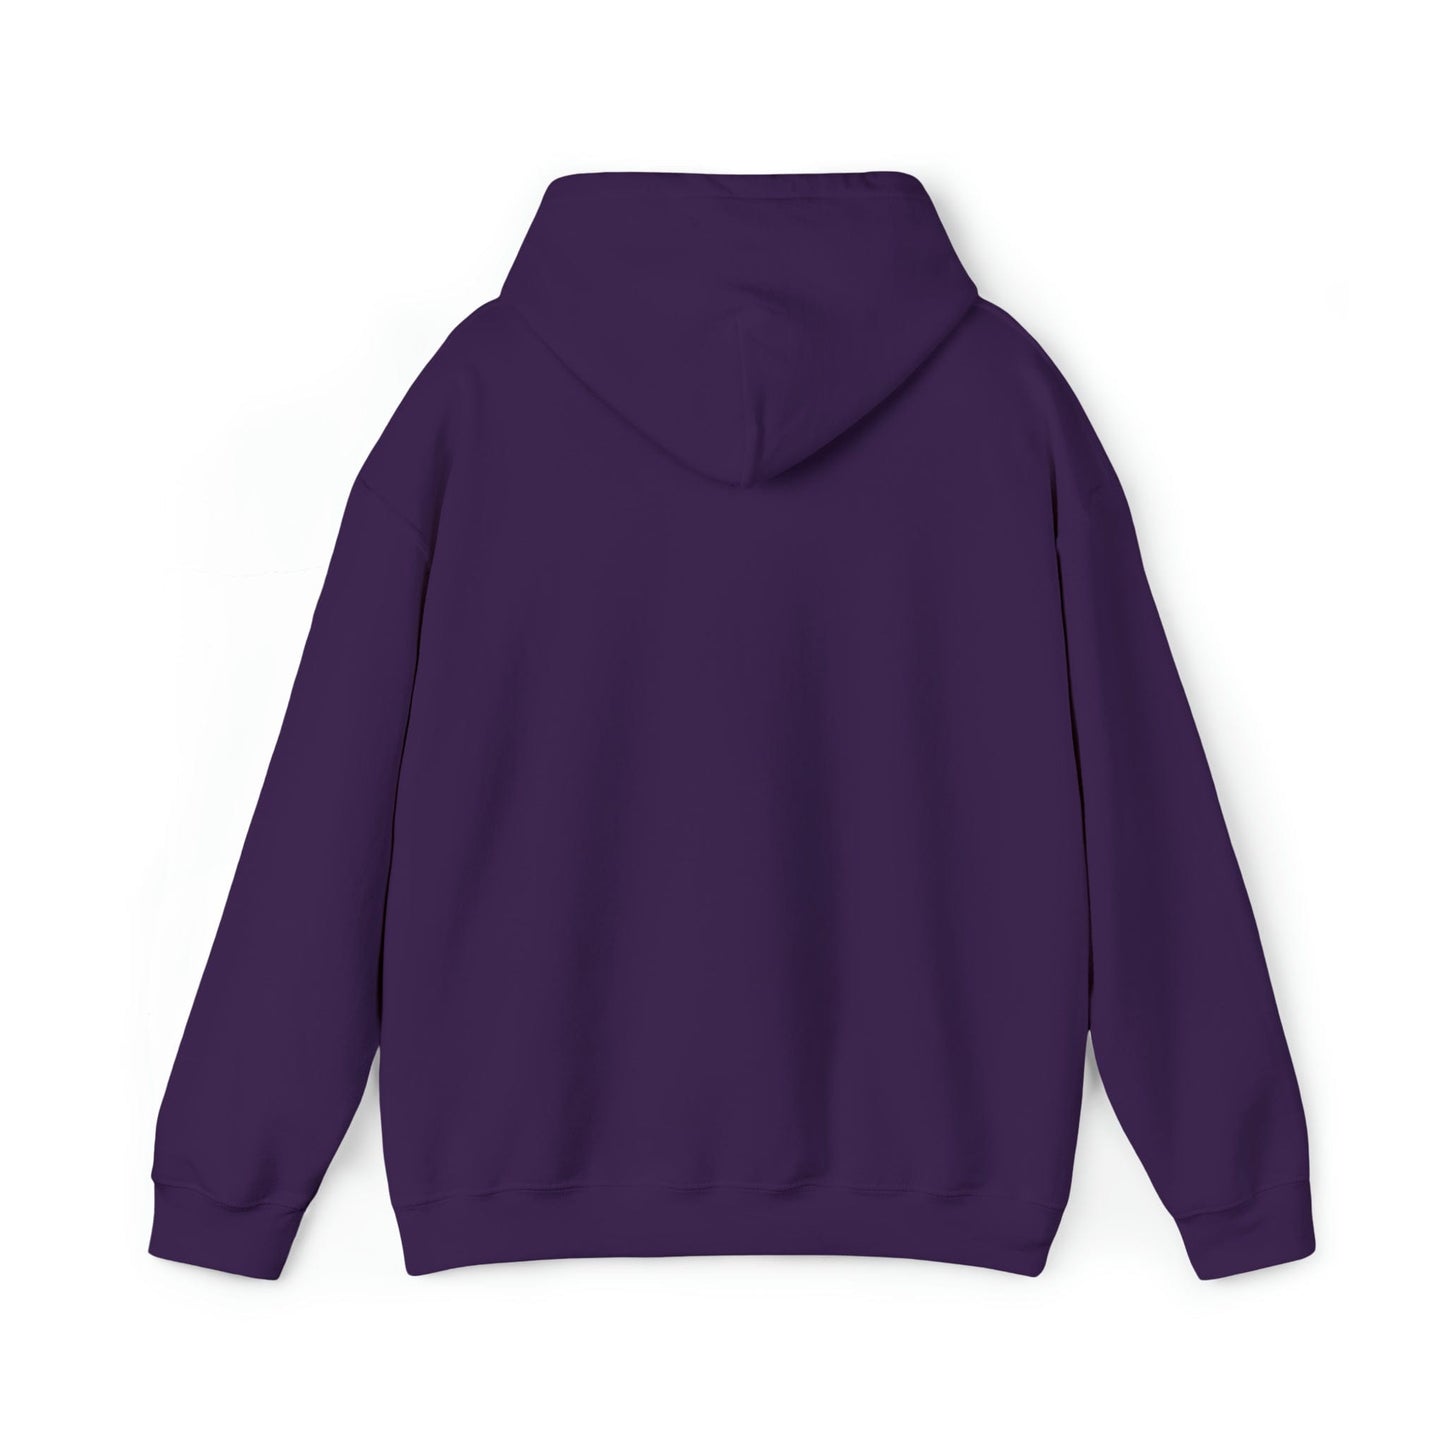 This Mama Prays Unisex Heavy Blend™ Hooded Sweatshirt